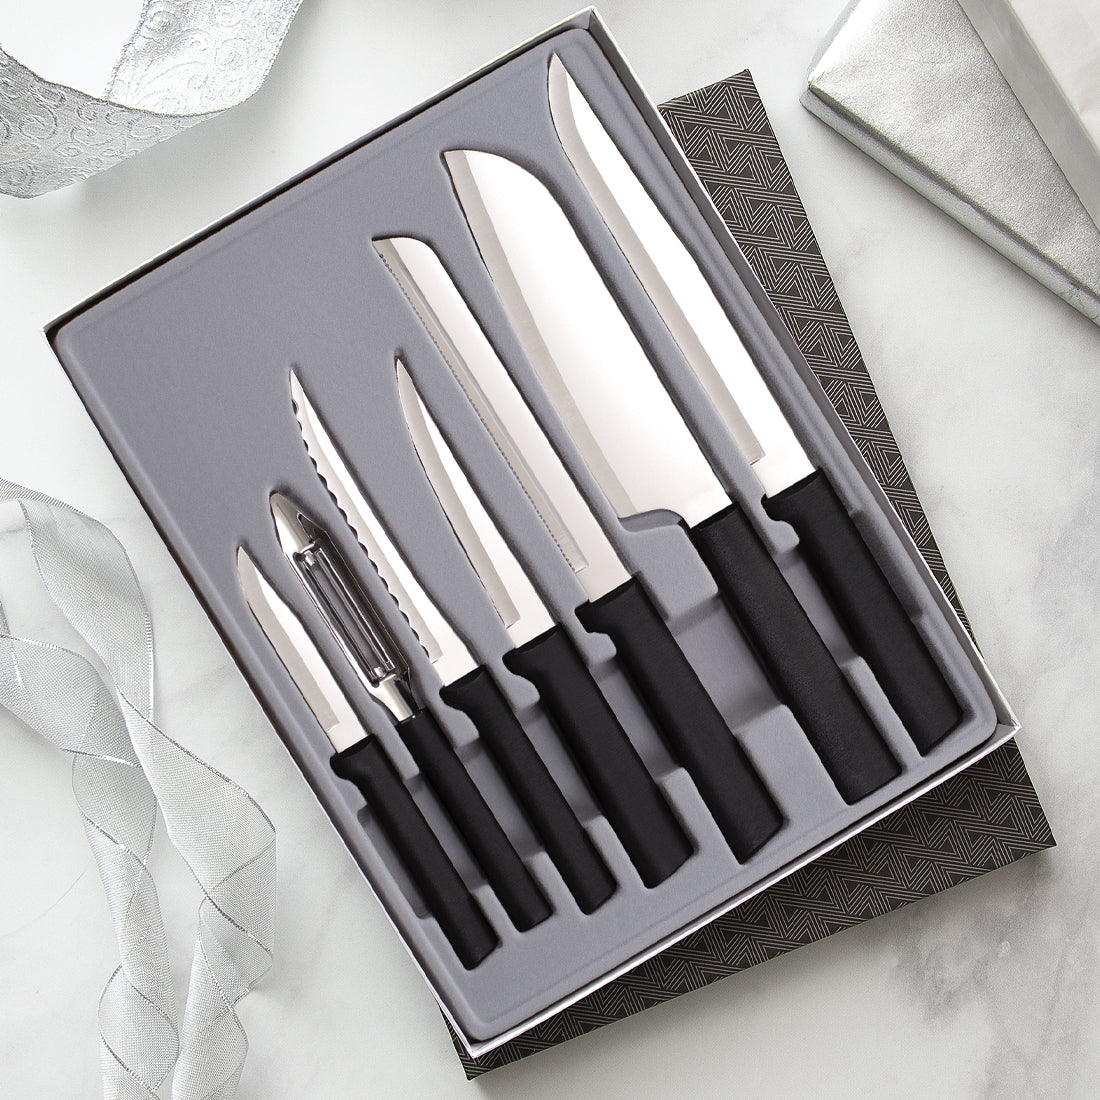 NEW!- Rada Cutlery: Alex's Favorites 8 piece Cutlery Set *including